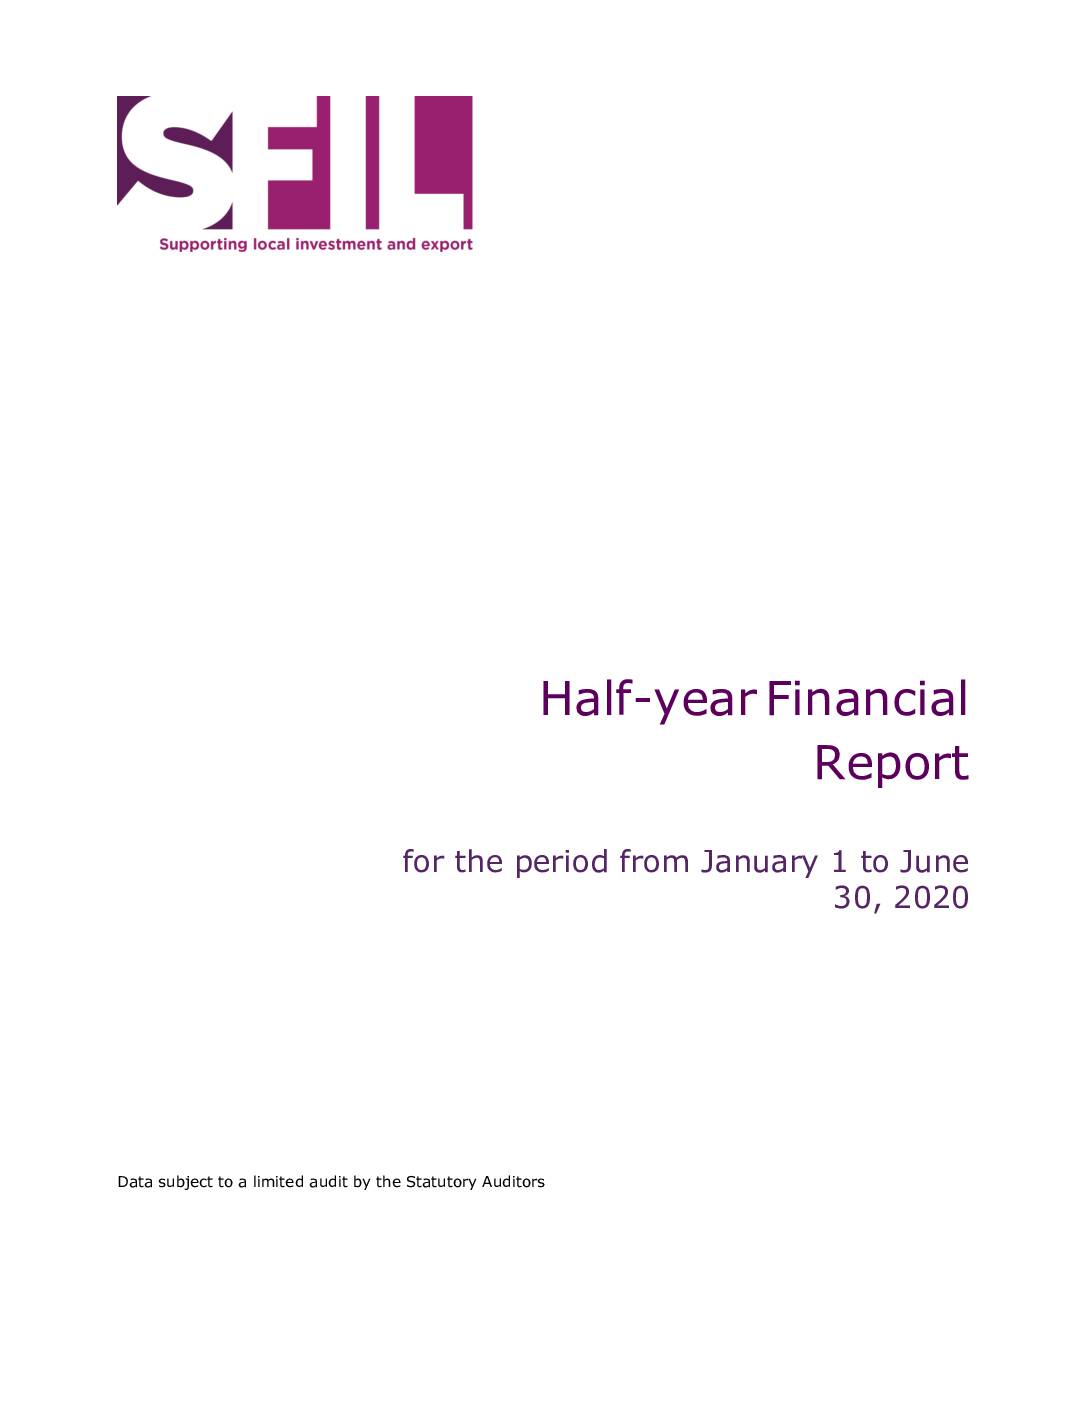 Half-year financial report 2020